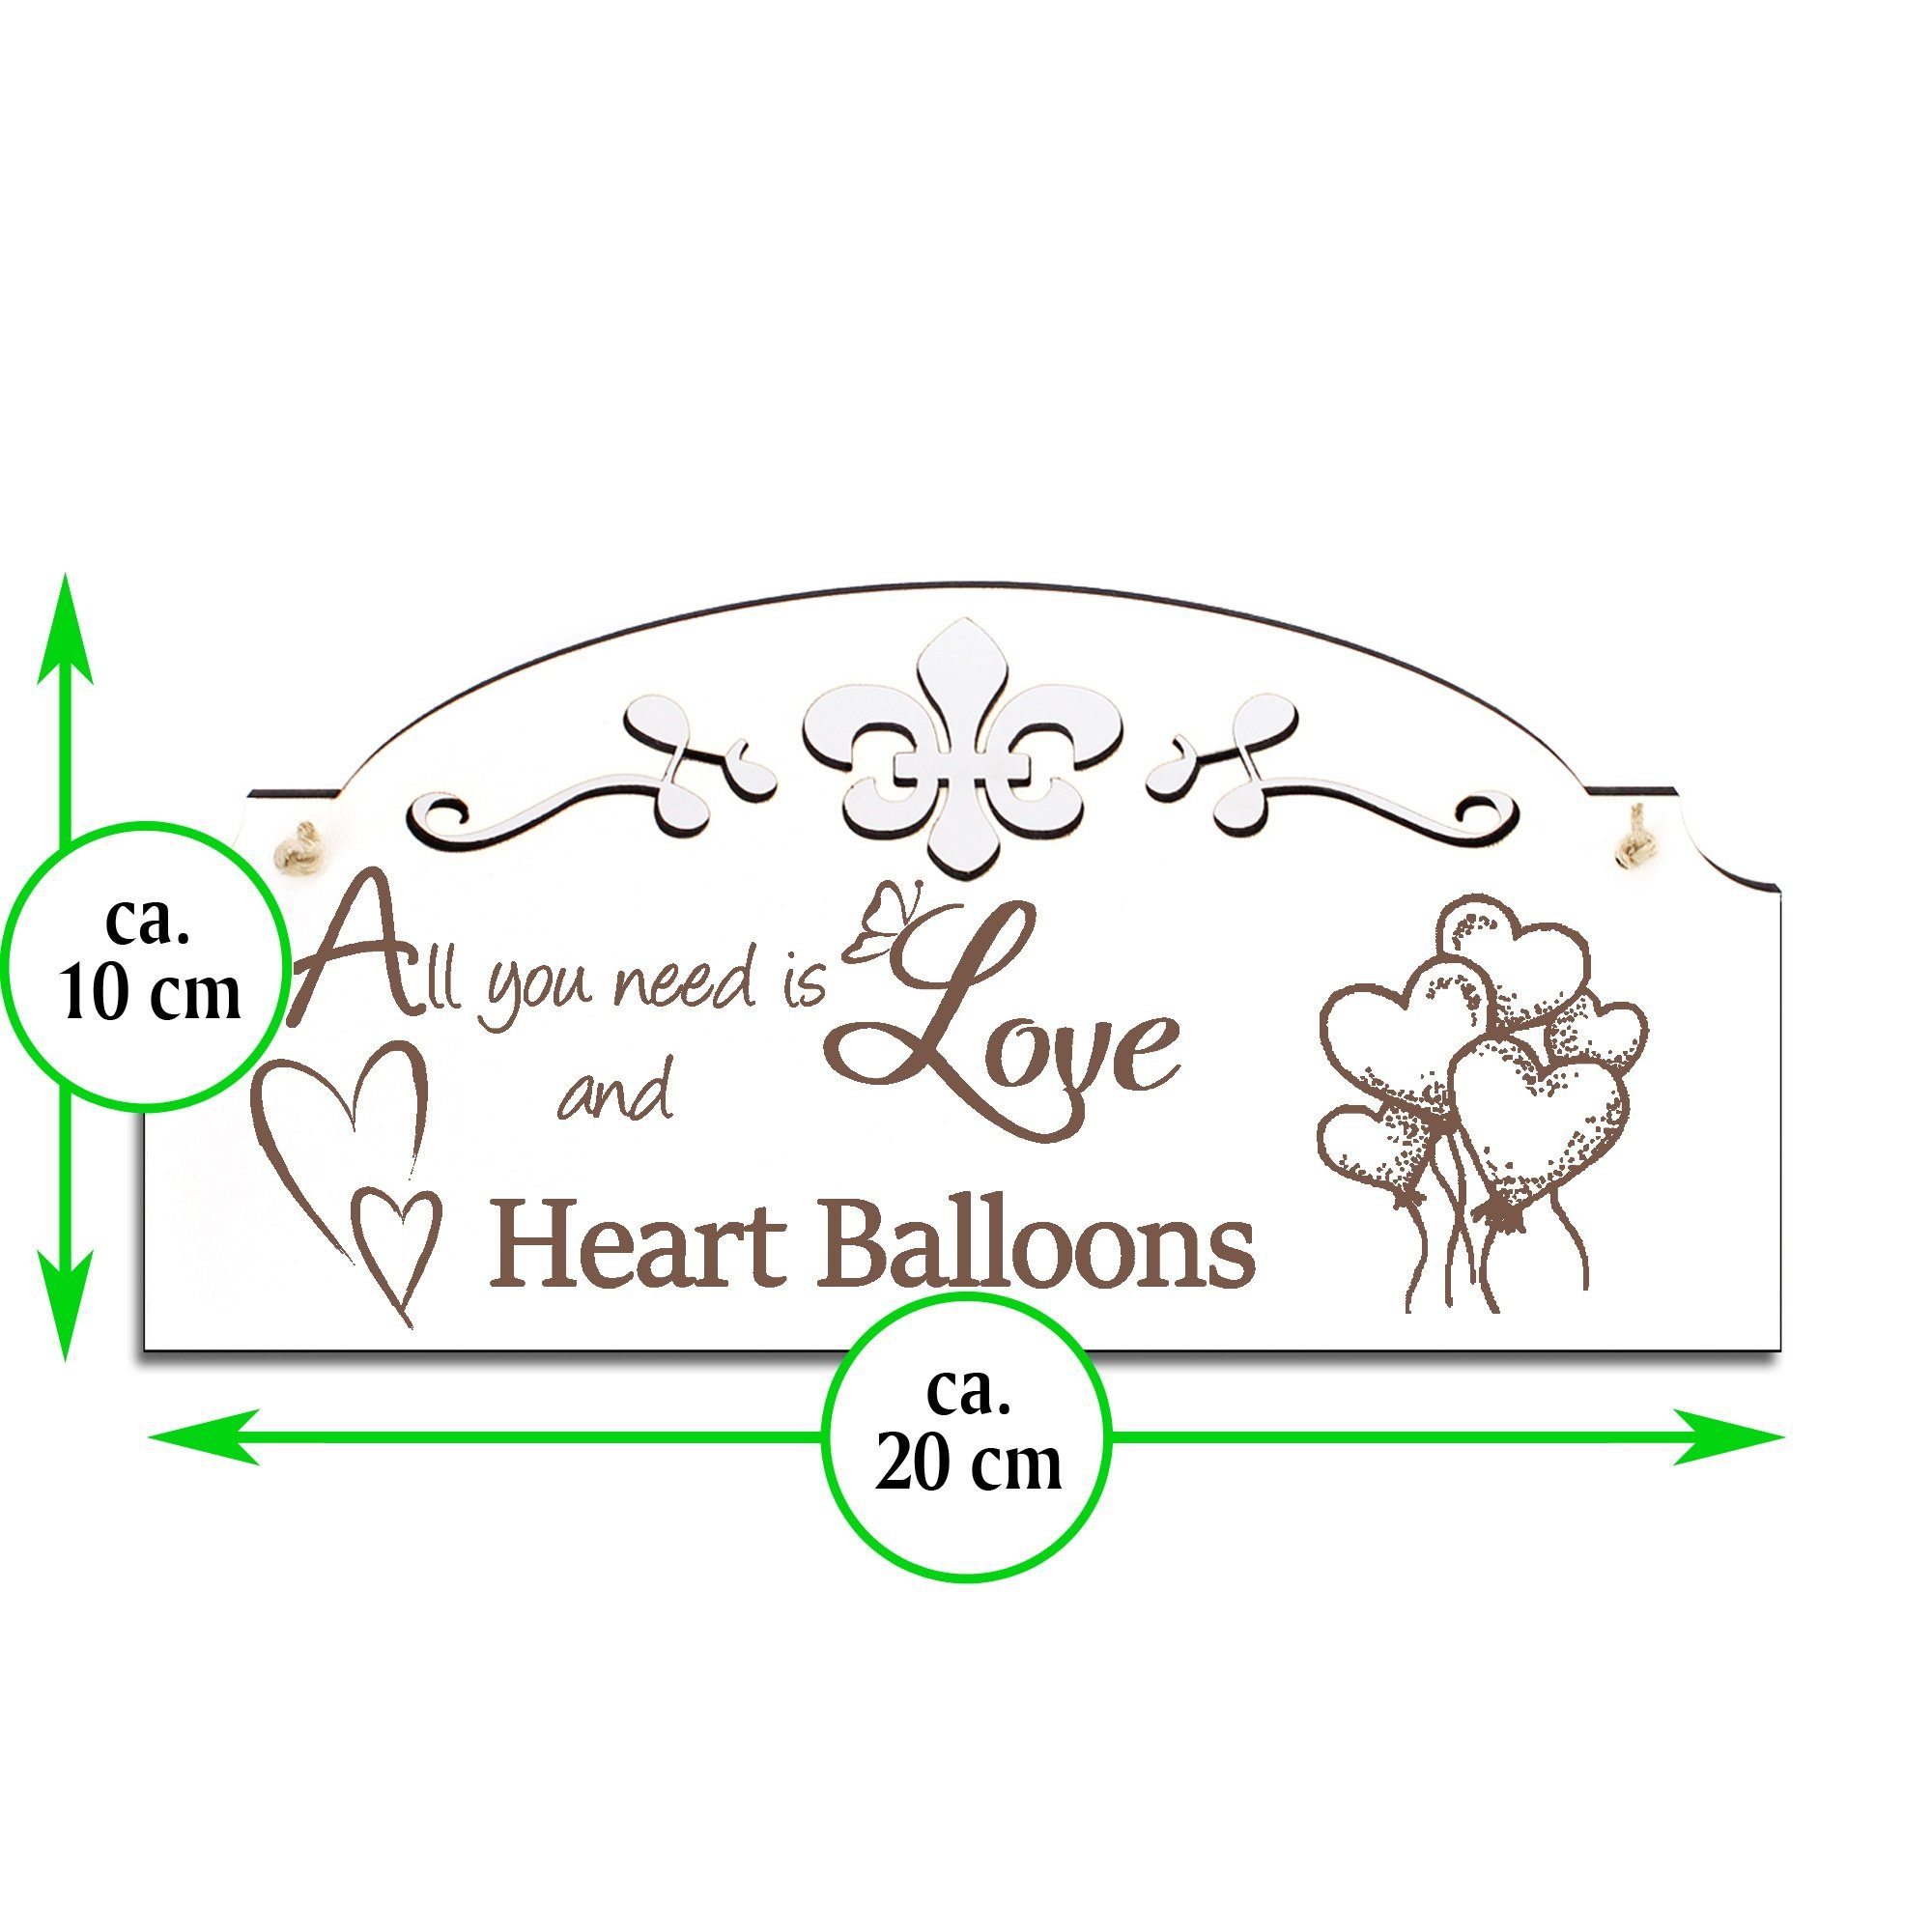 Hängedekoration Herzluftballons is you All Love 20x10cm need Dekolando Deko